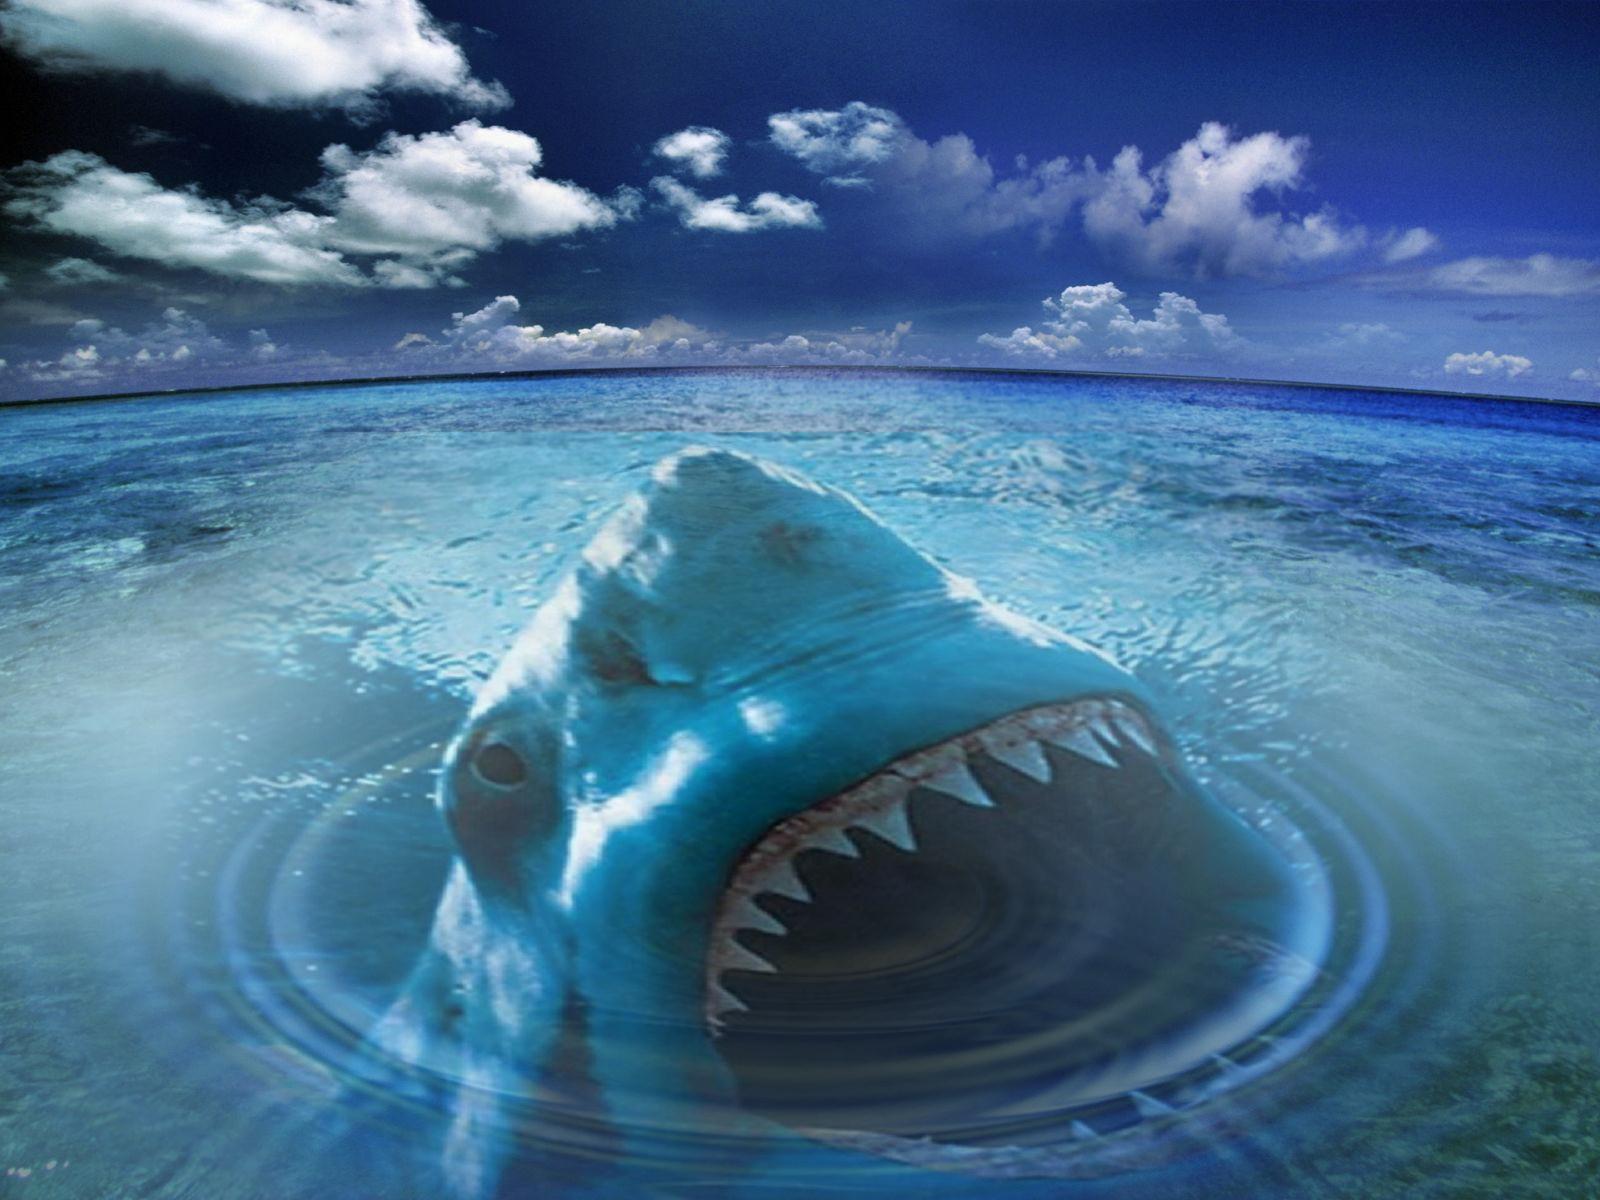 live desktop wallpaper sharks